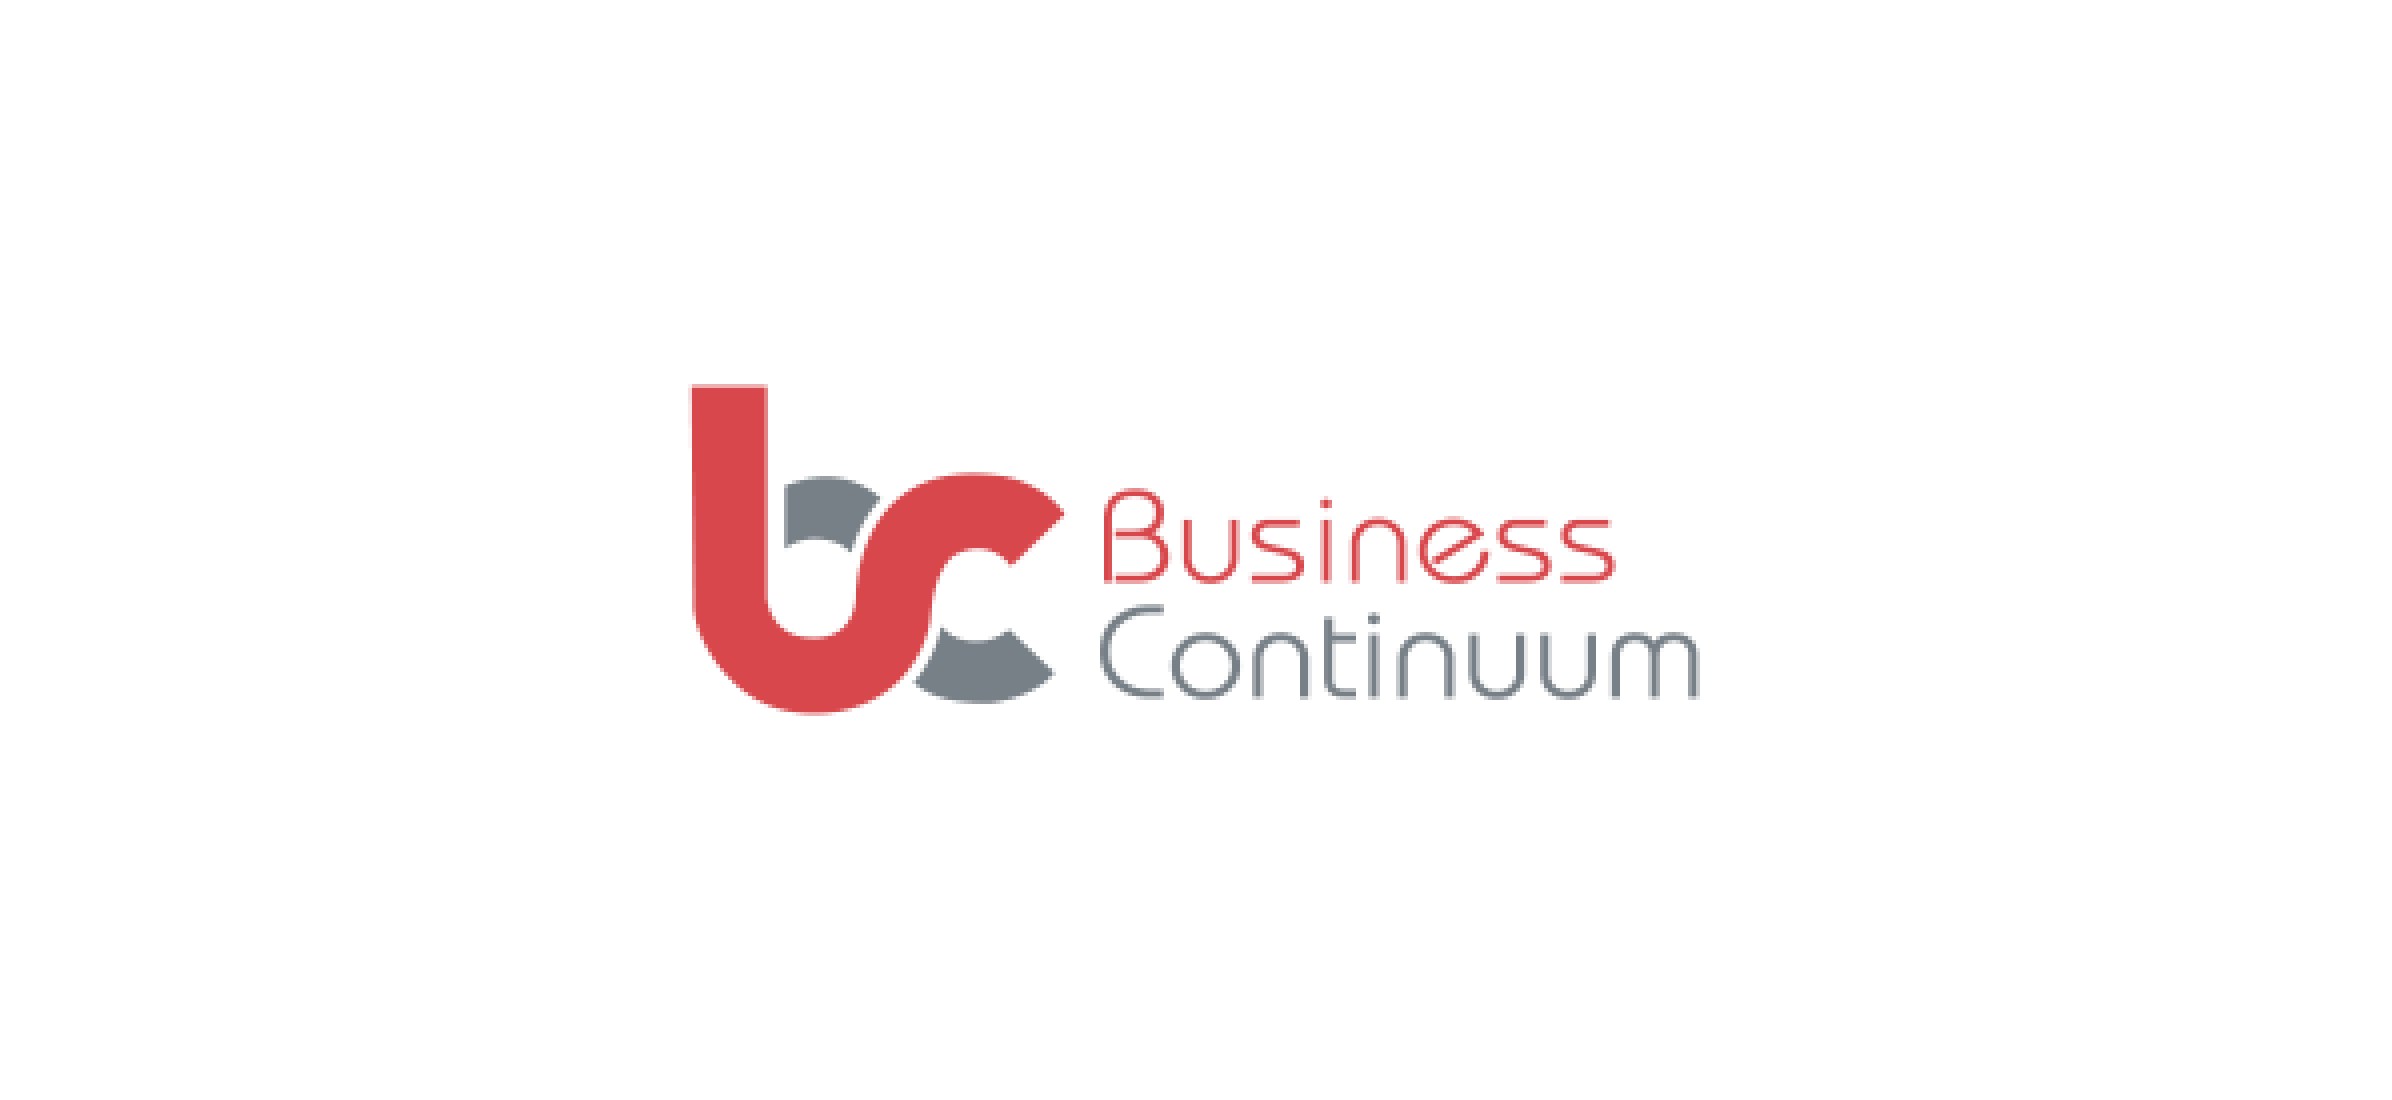 The Business Continuum logo